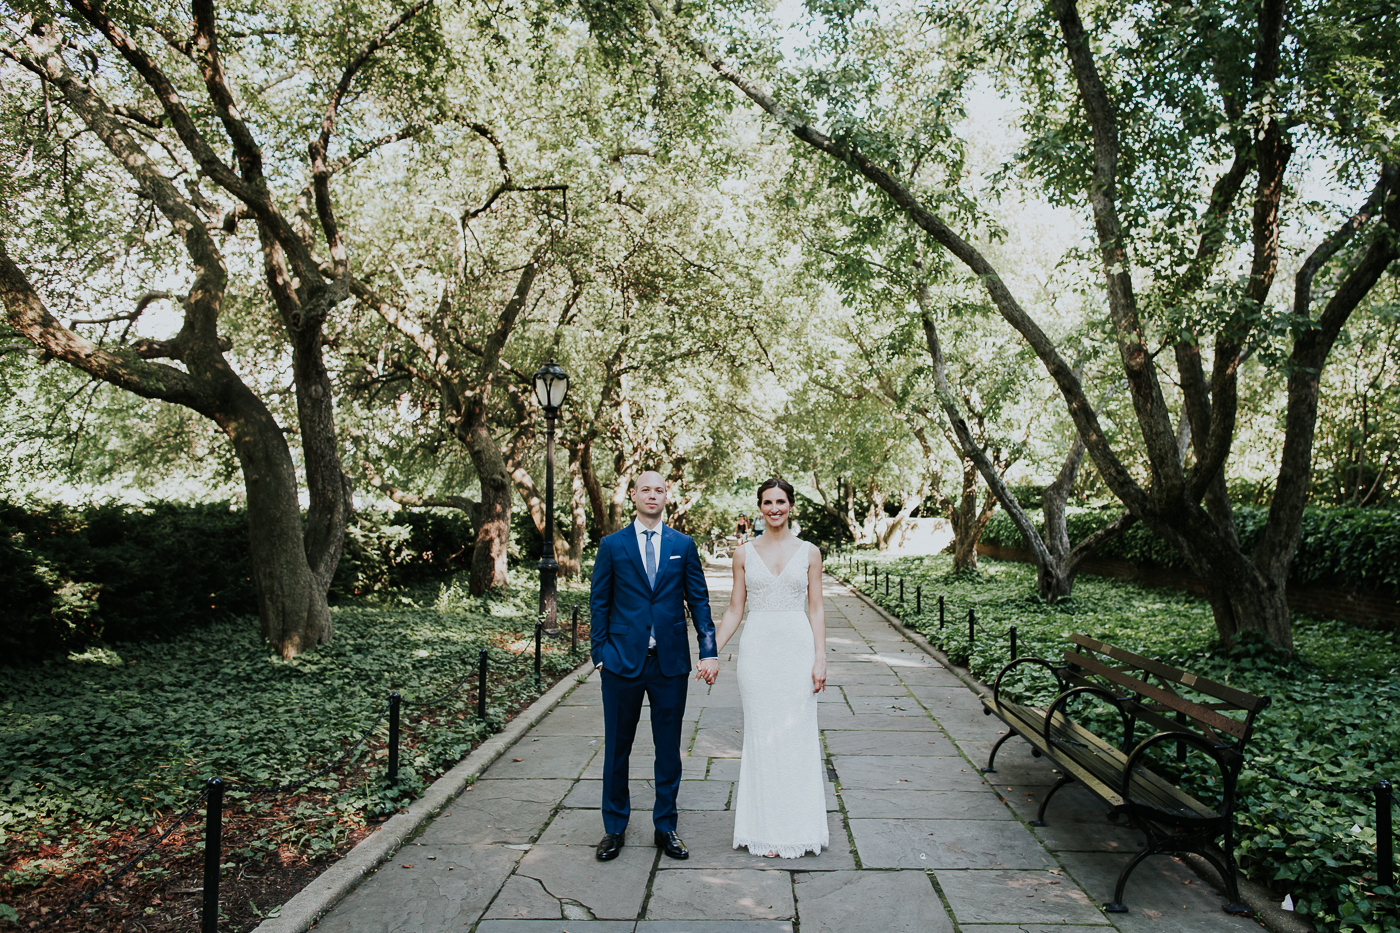 NYC-Central-Park-Conservatory-Garden-Intimate-Elopement-Documentary-Wedding-Photographer-39.jpg